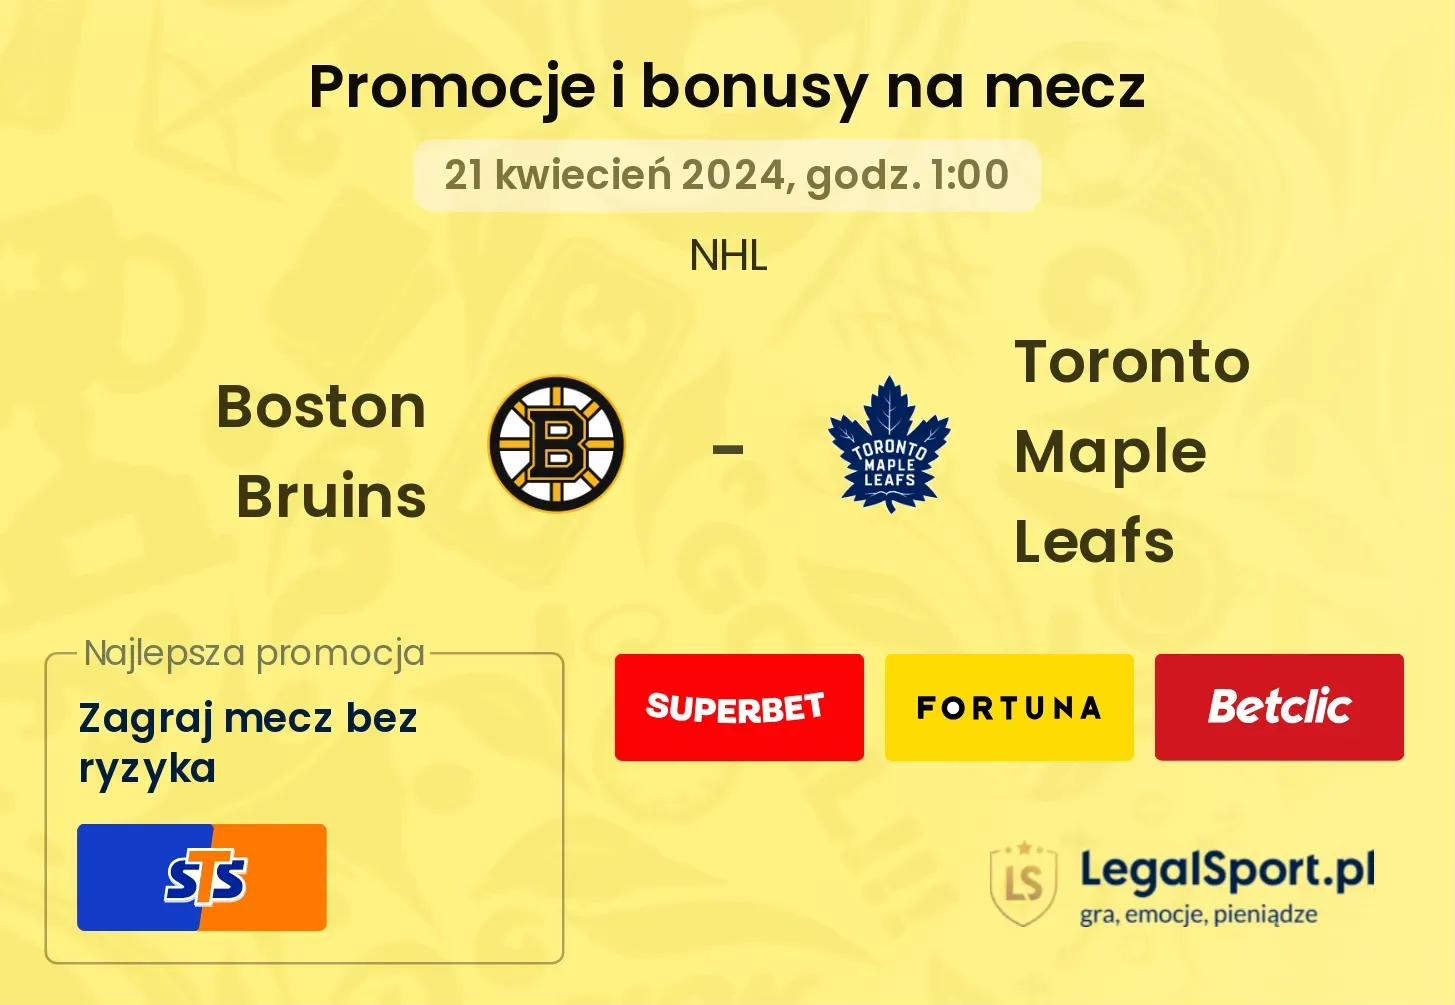 Boston Bruins - Toronto Maple Leafs bonusy i promocje (21.04, 01:00)